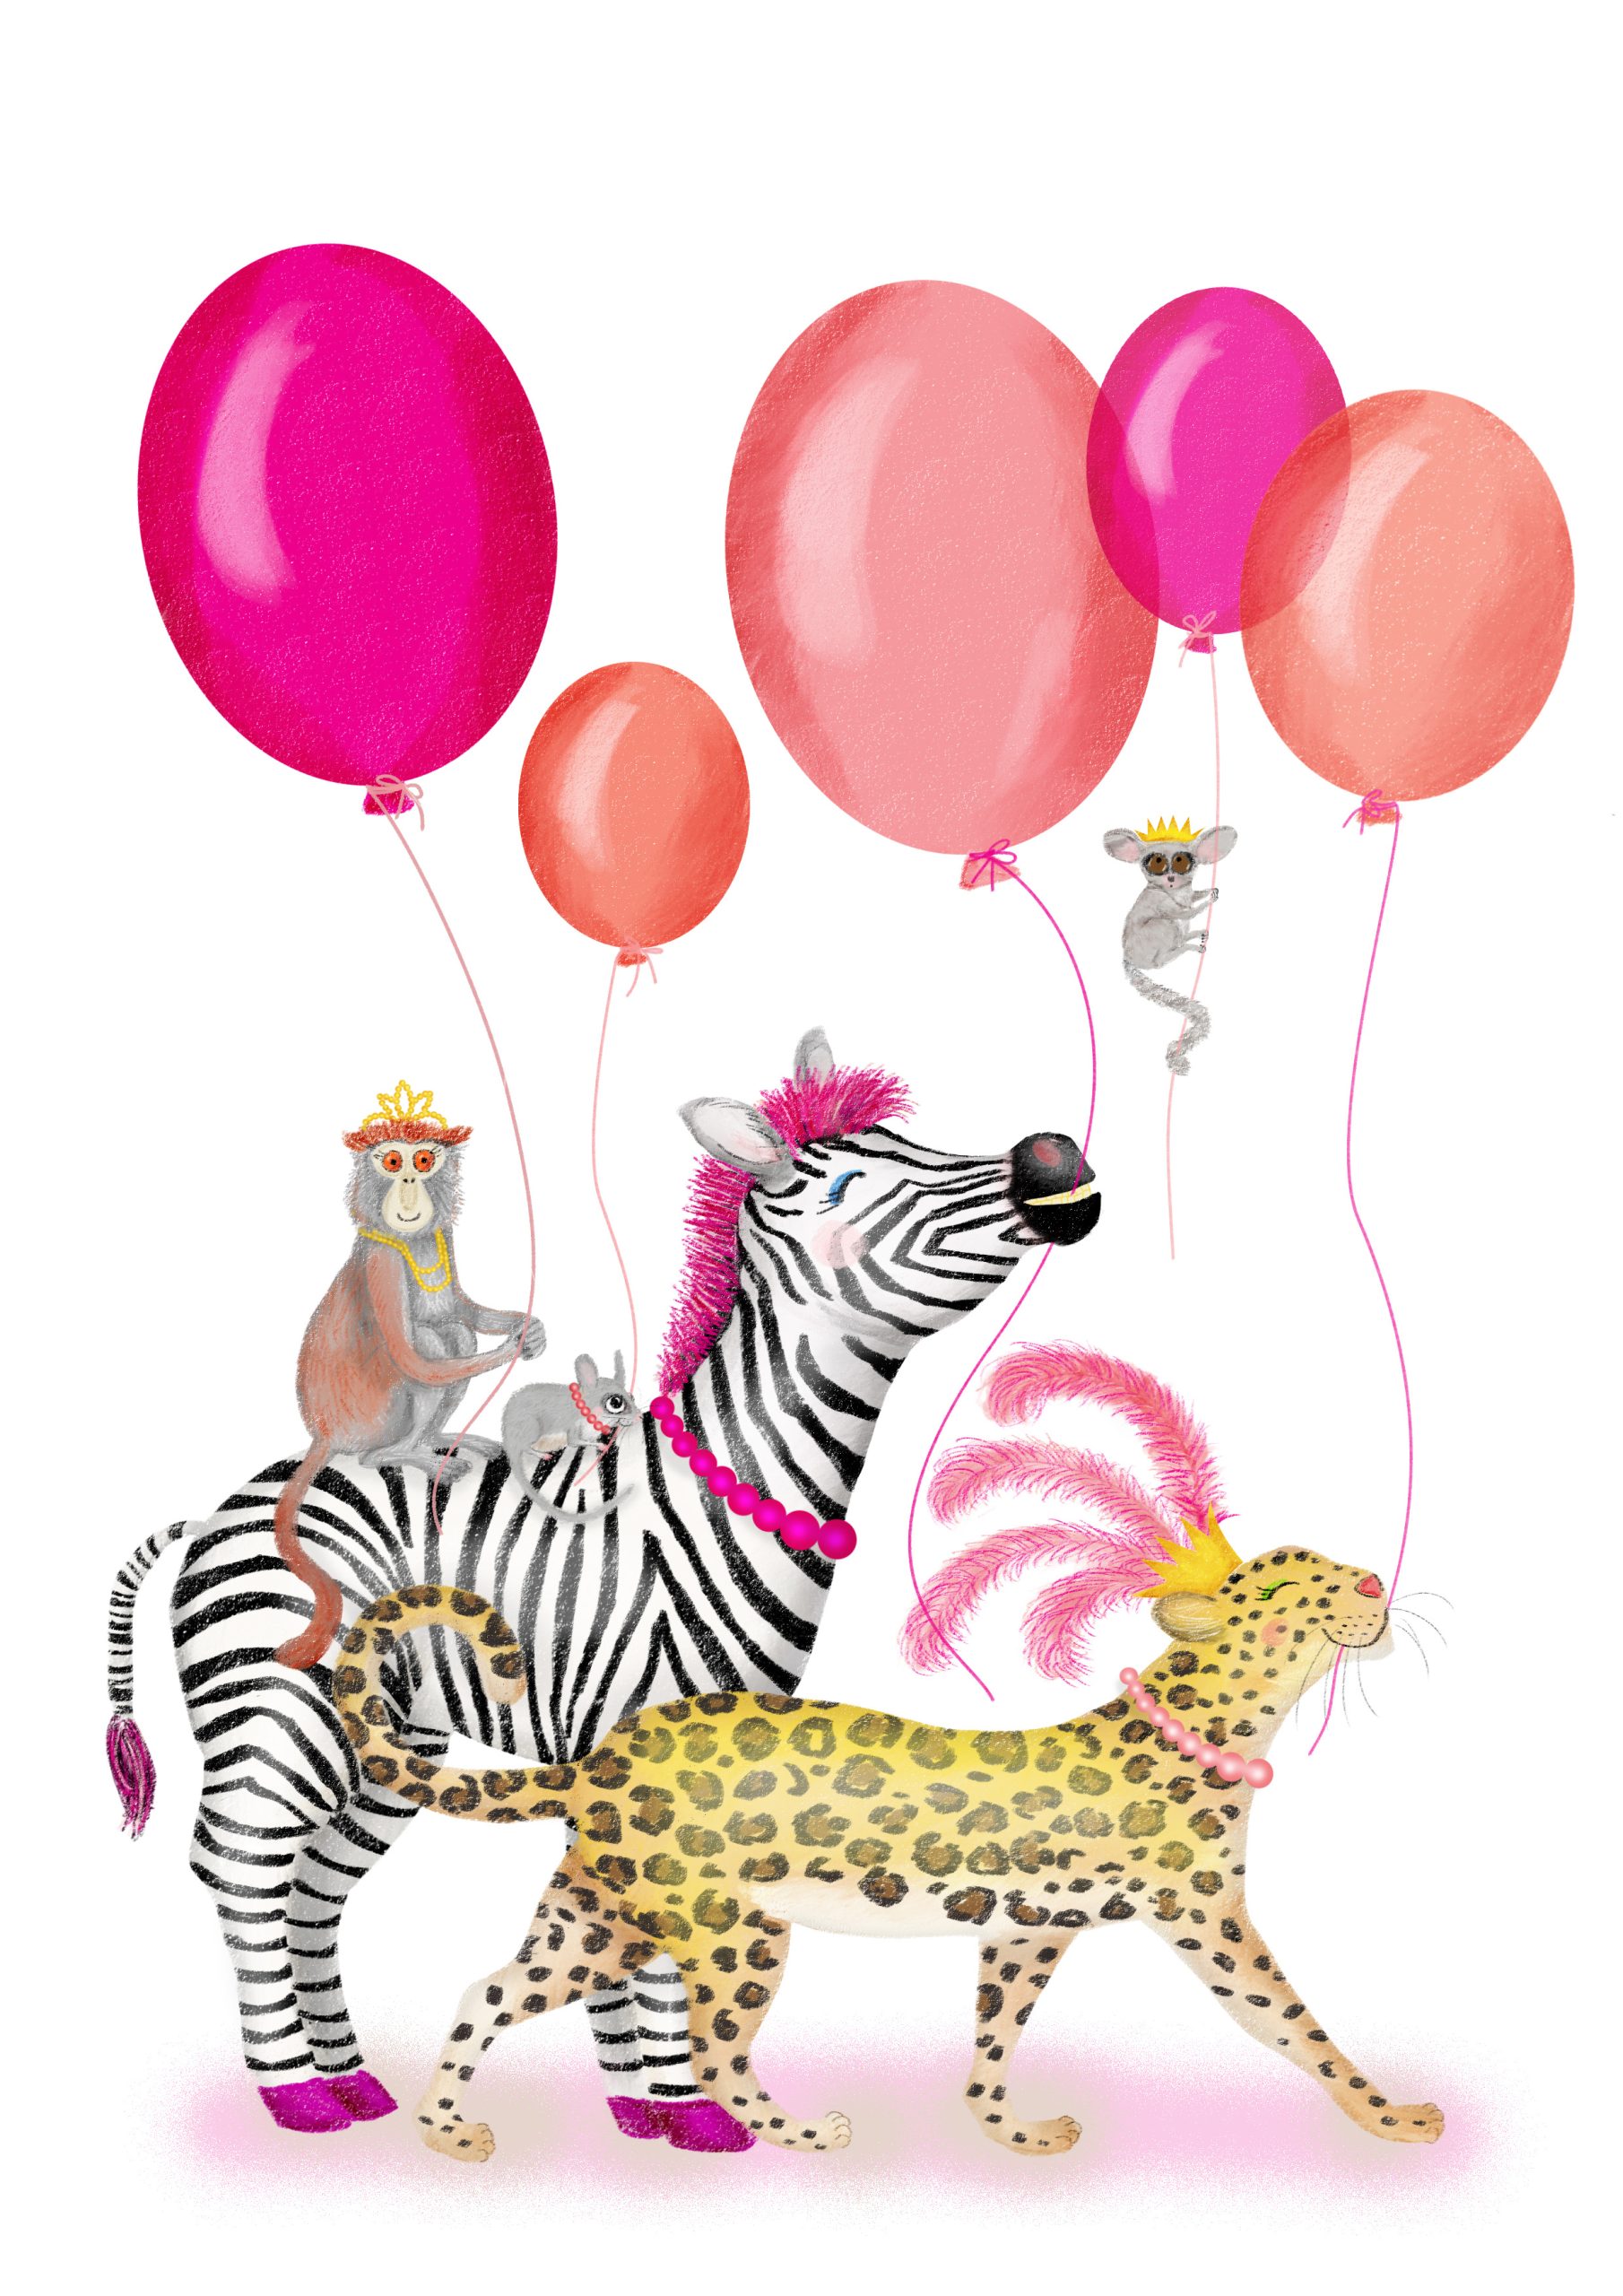 Glamorous leopard, zebra and monkeys holding pink balloons